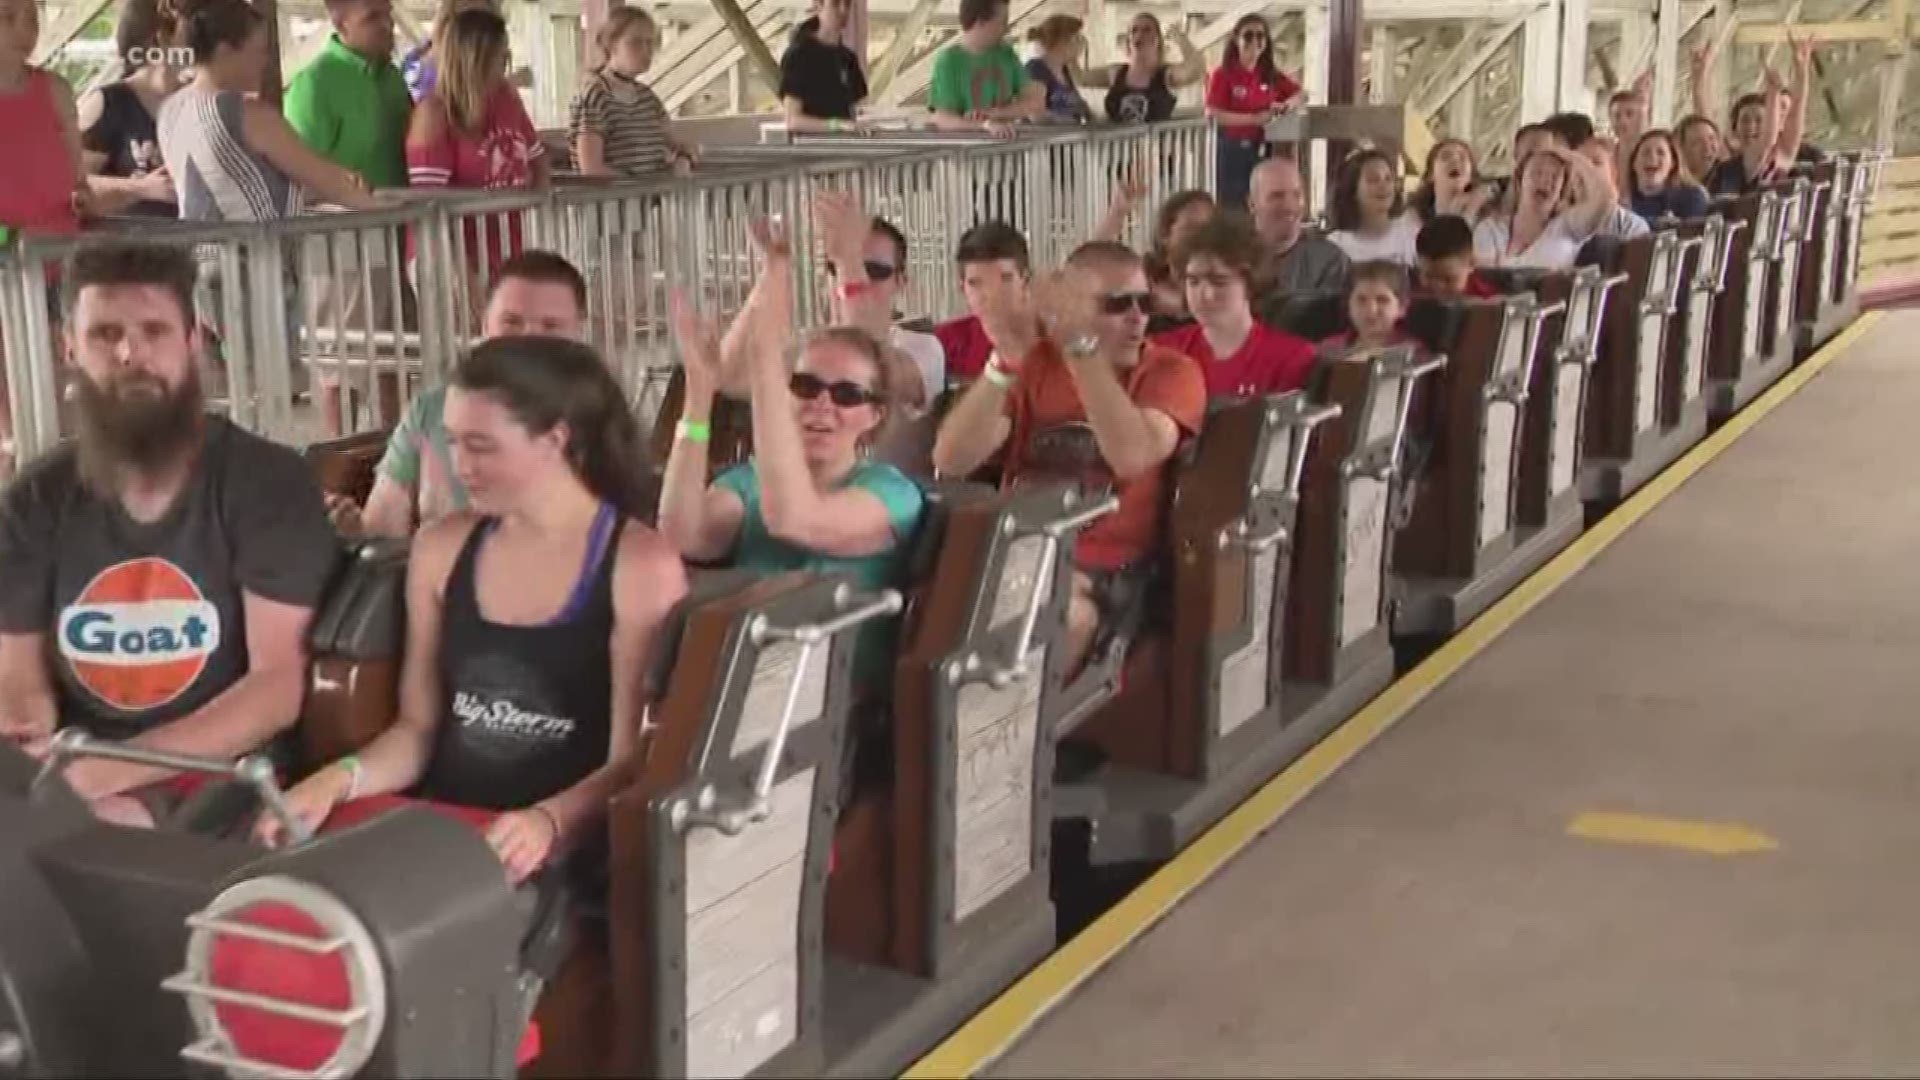 Recent survey ranks Cedar Point 3rd best amusement park in world